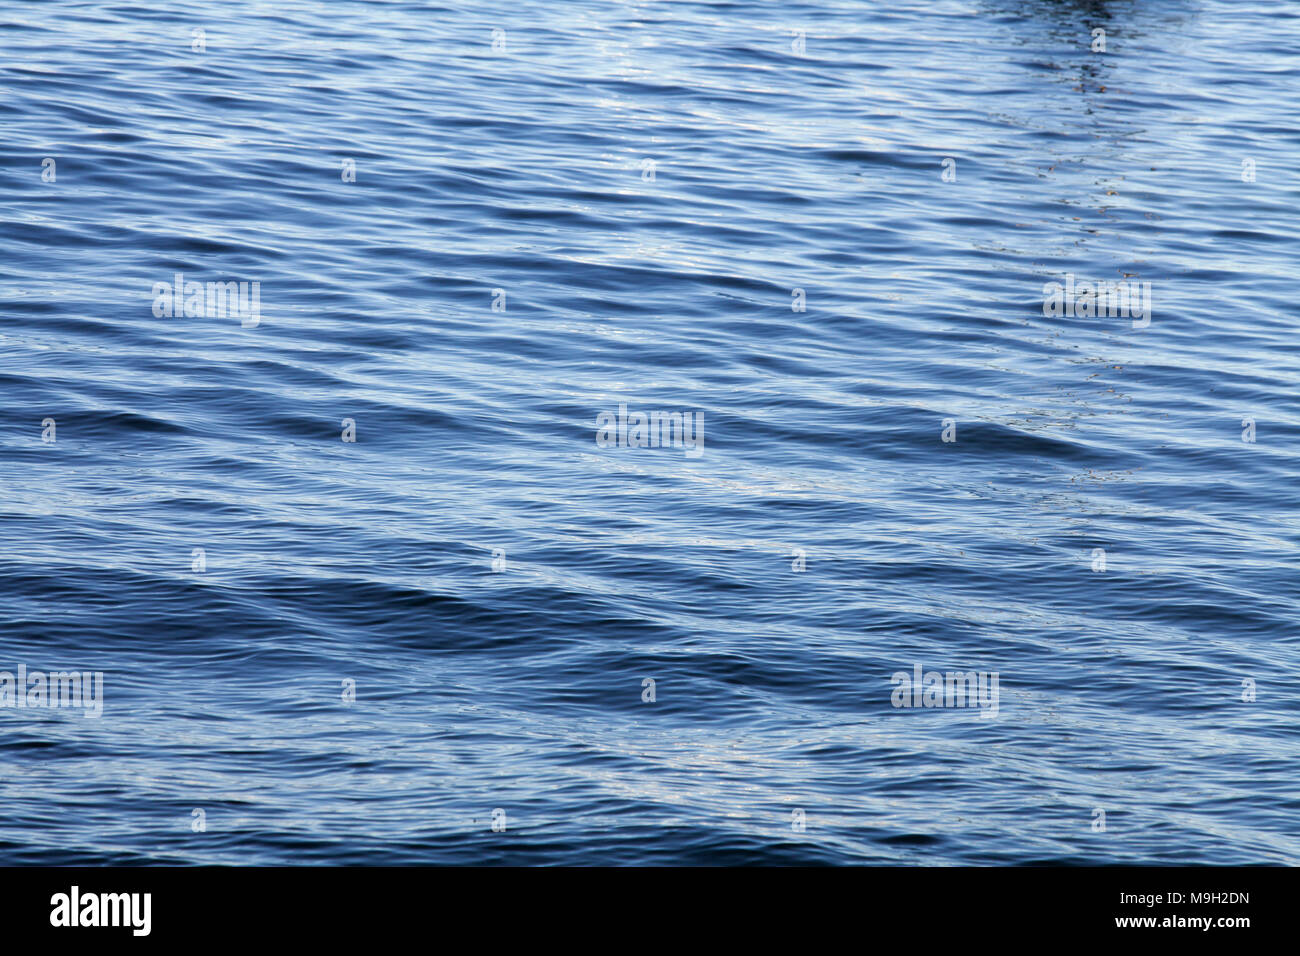 Study of water, waves Australia Stock Photo